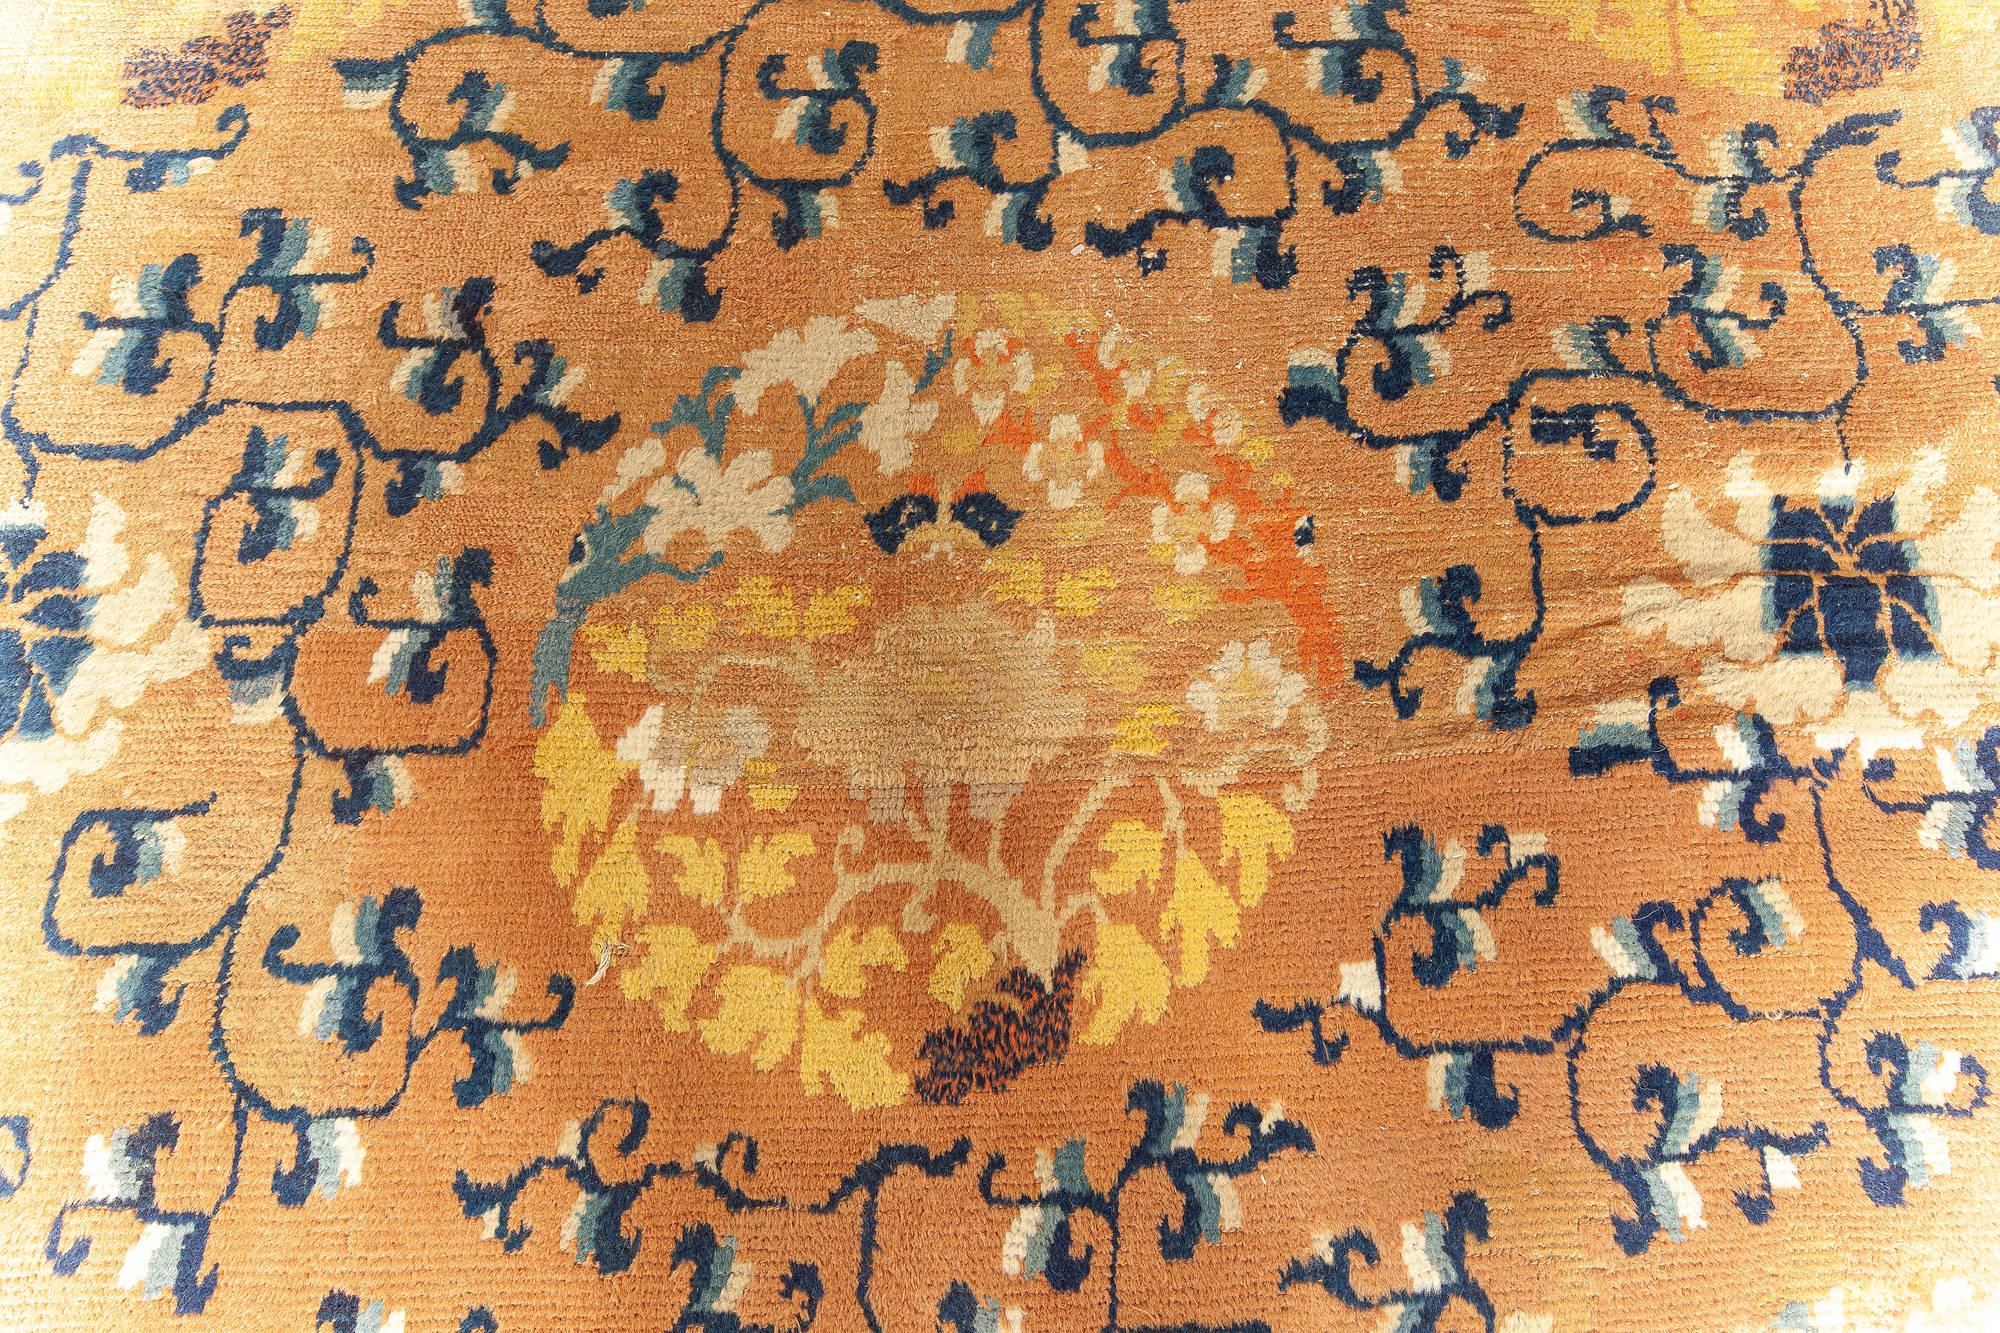 Authentic 19th Century Chinese Yellow Handmade Wool Rug
Size: 18'6